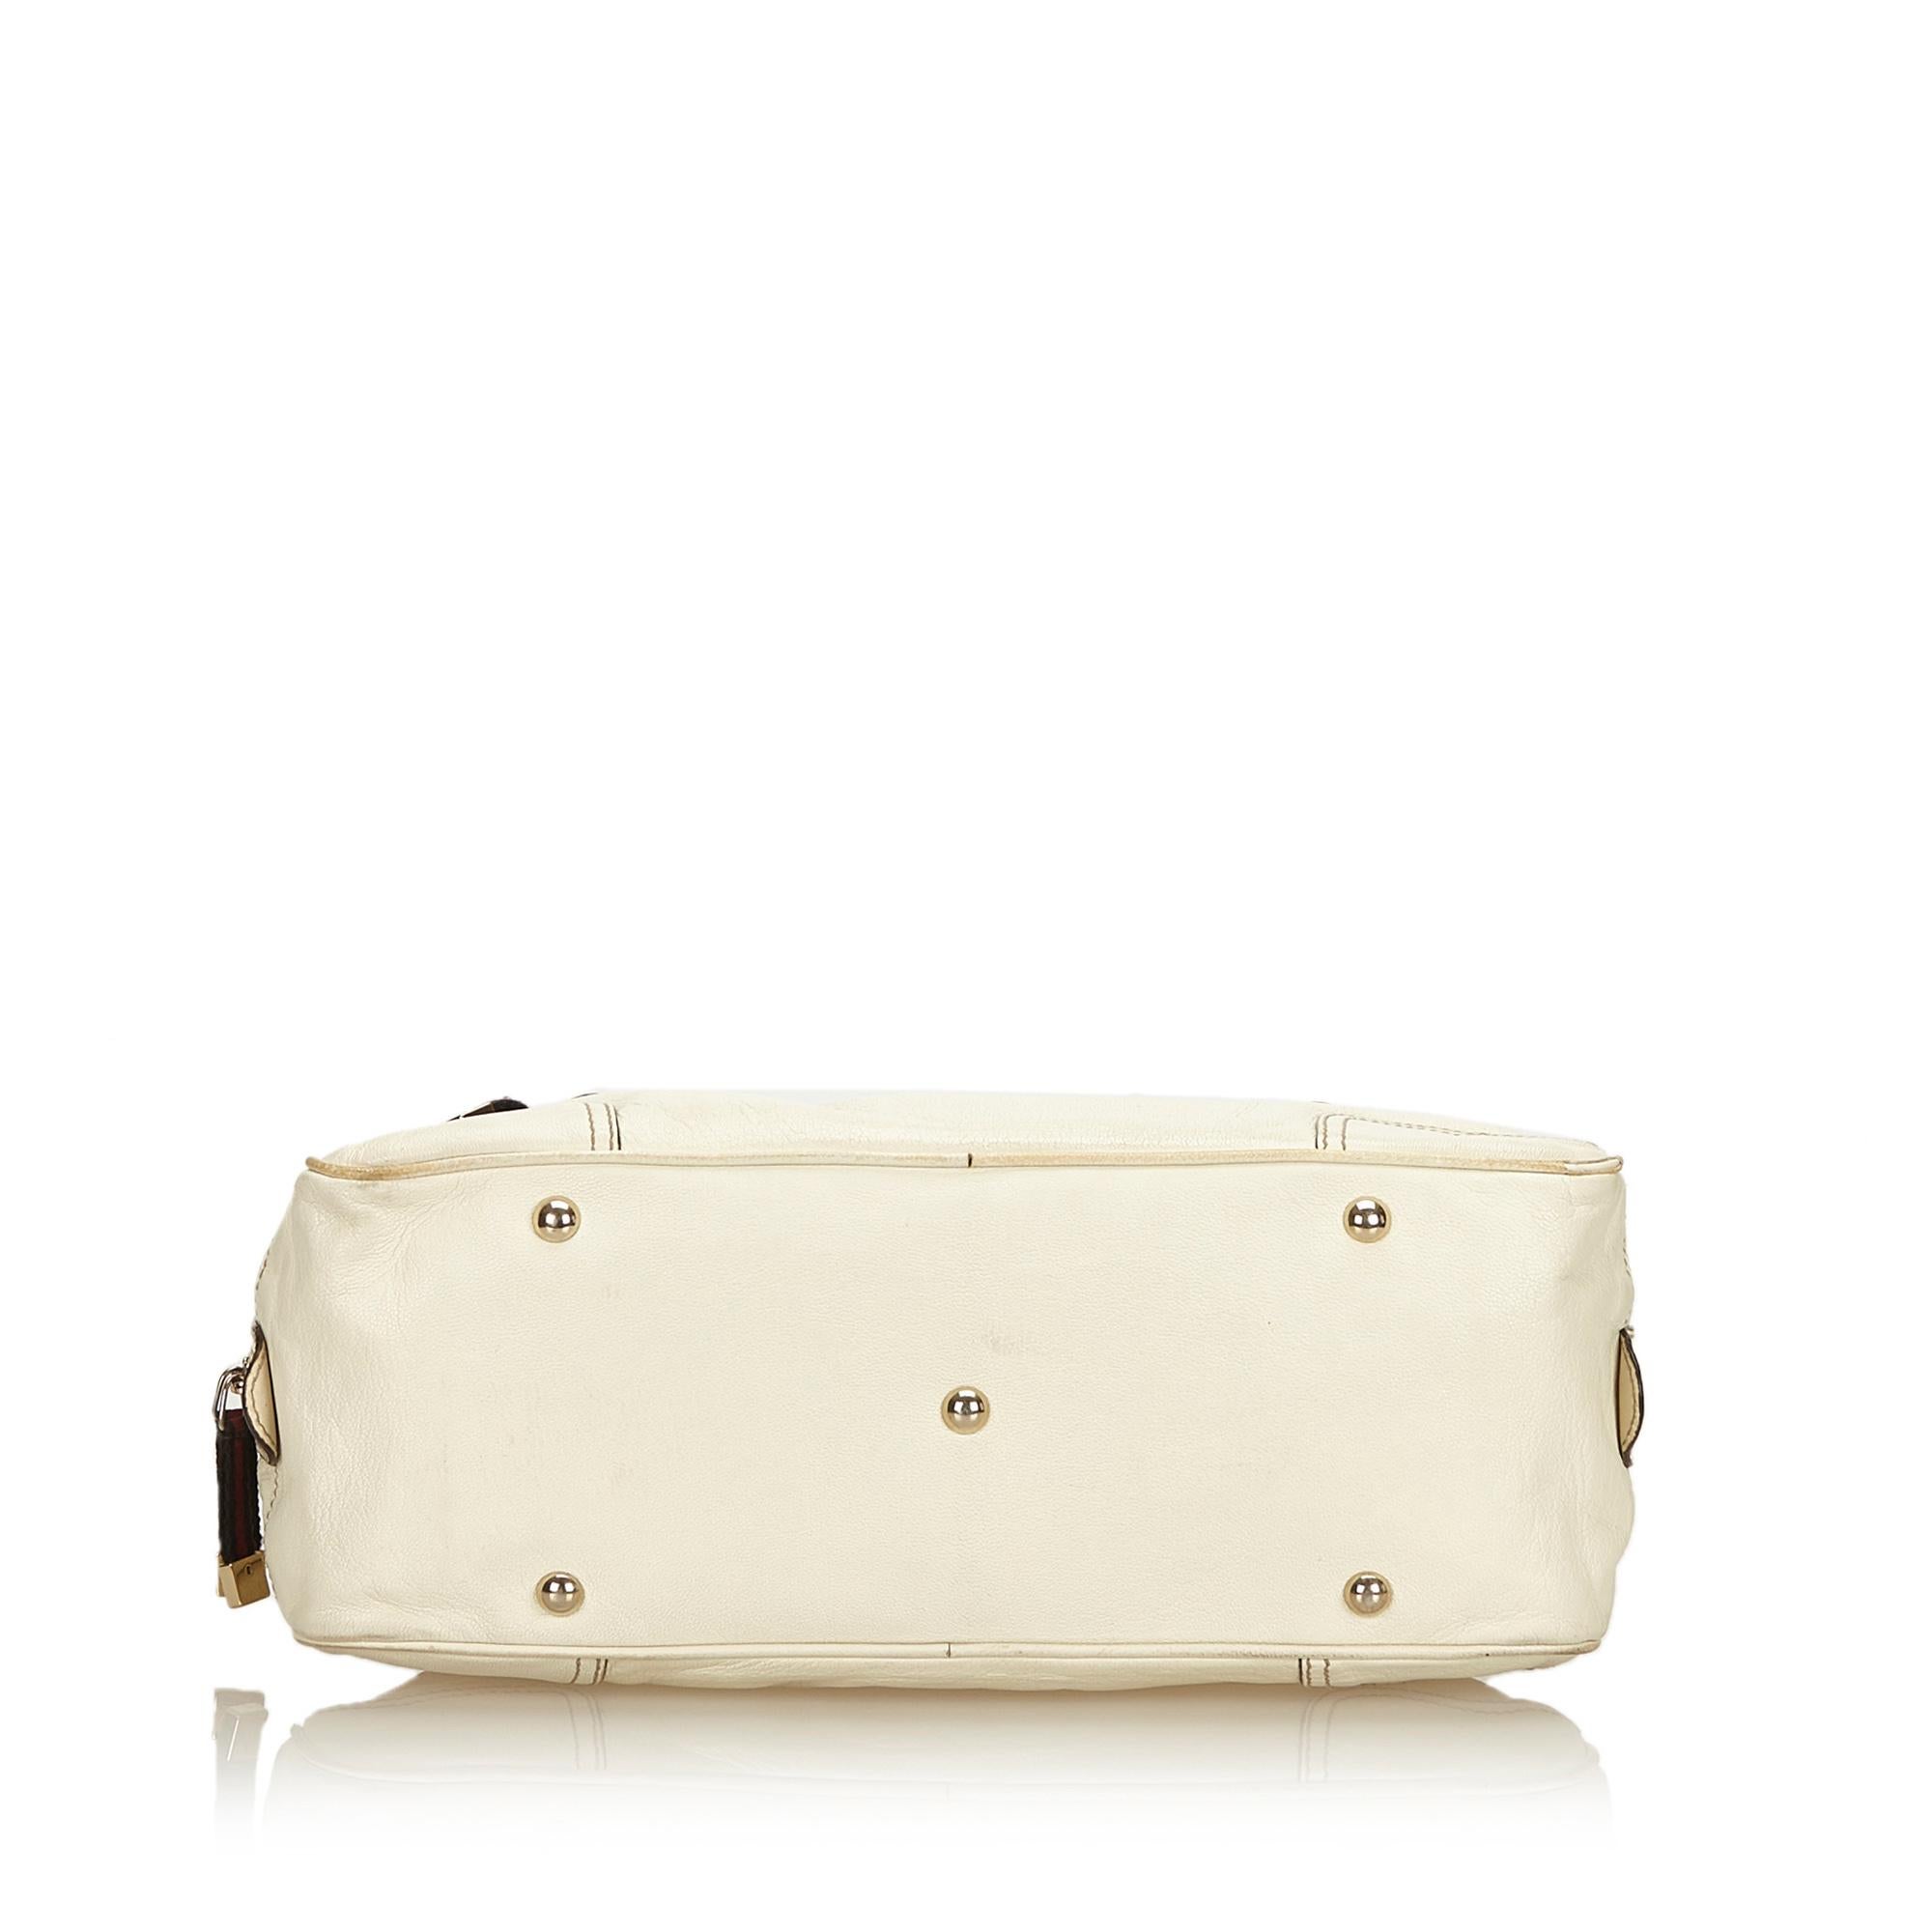 Women's or Men's Gucci White Leather Princy Shoulder Bag For Sale